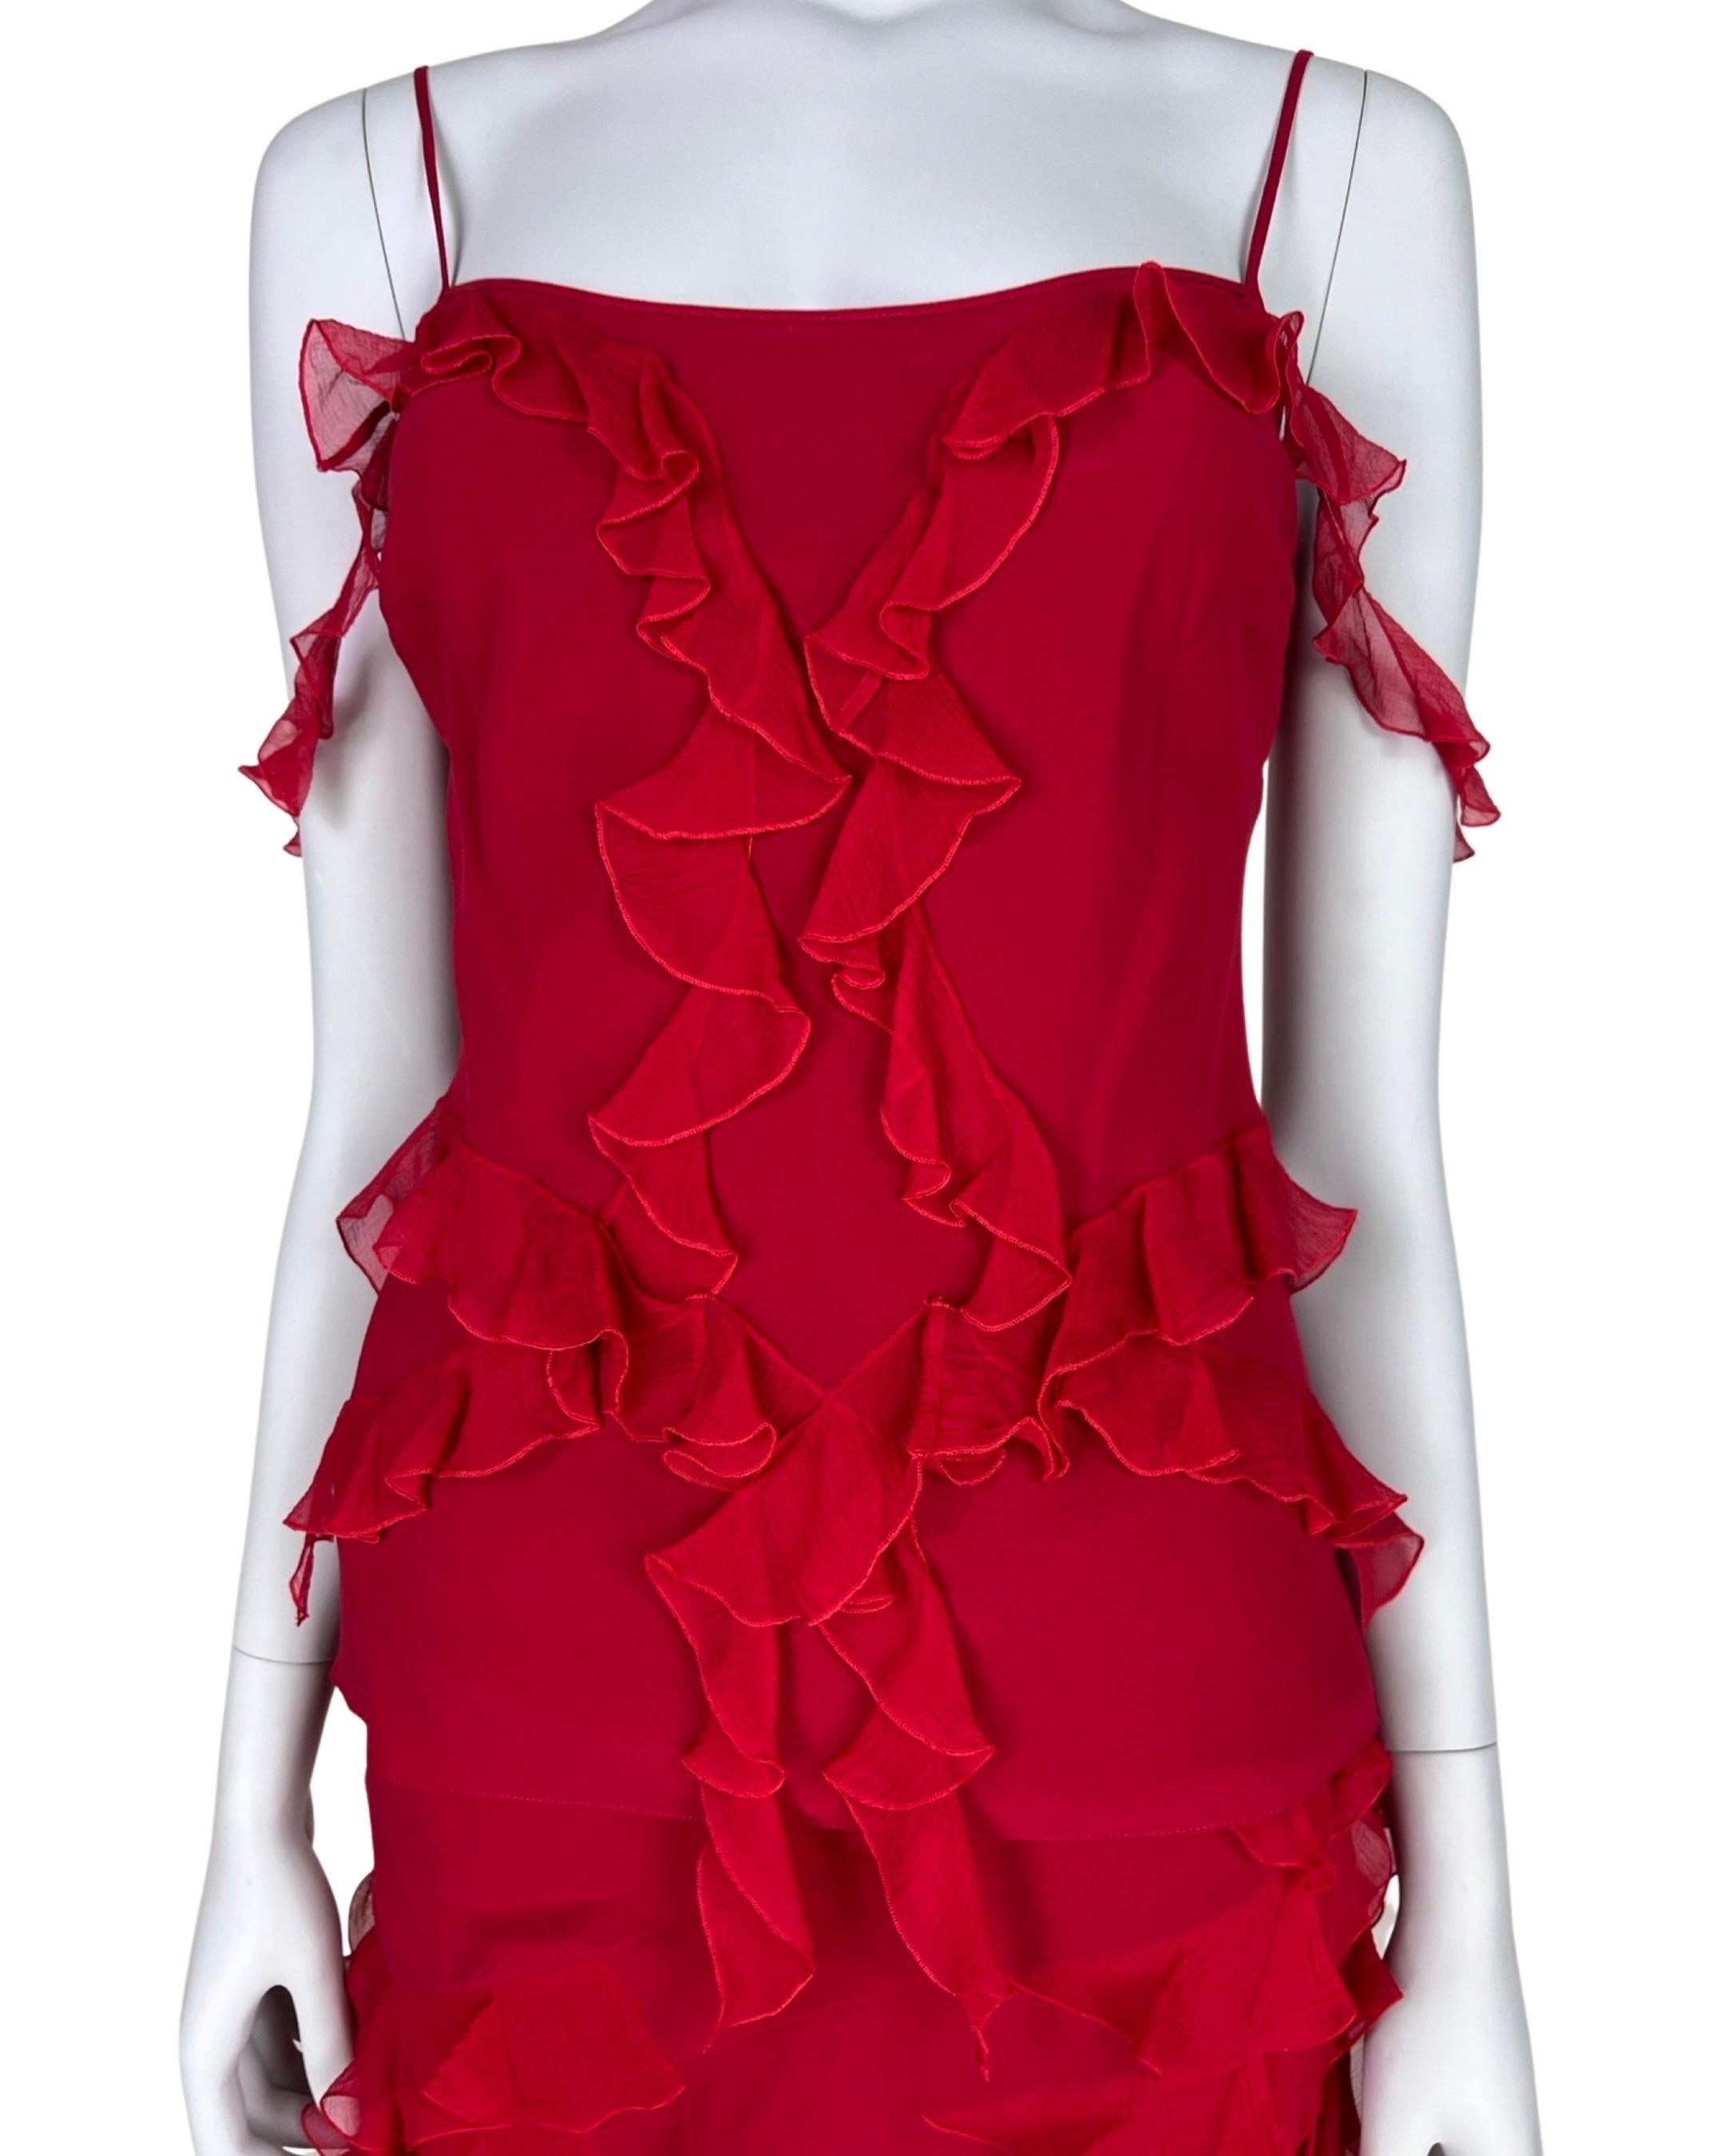 Dior by John Galliano Fall 2004 Red Ruffled Silk Set 1